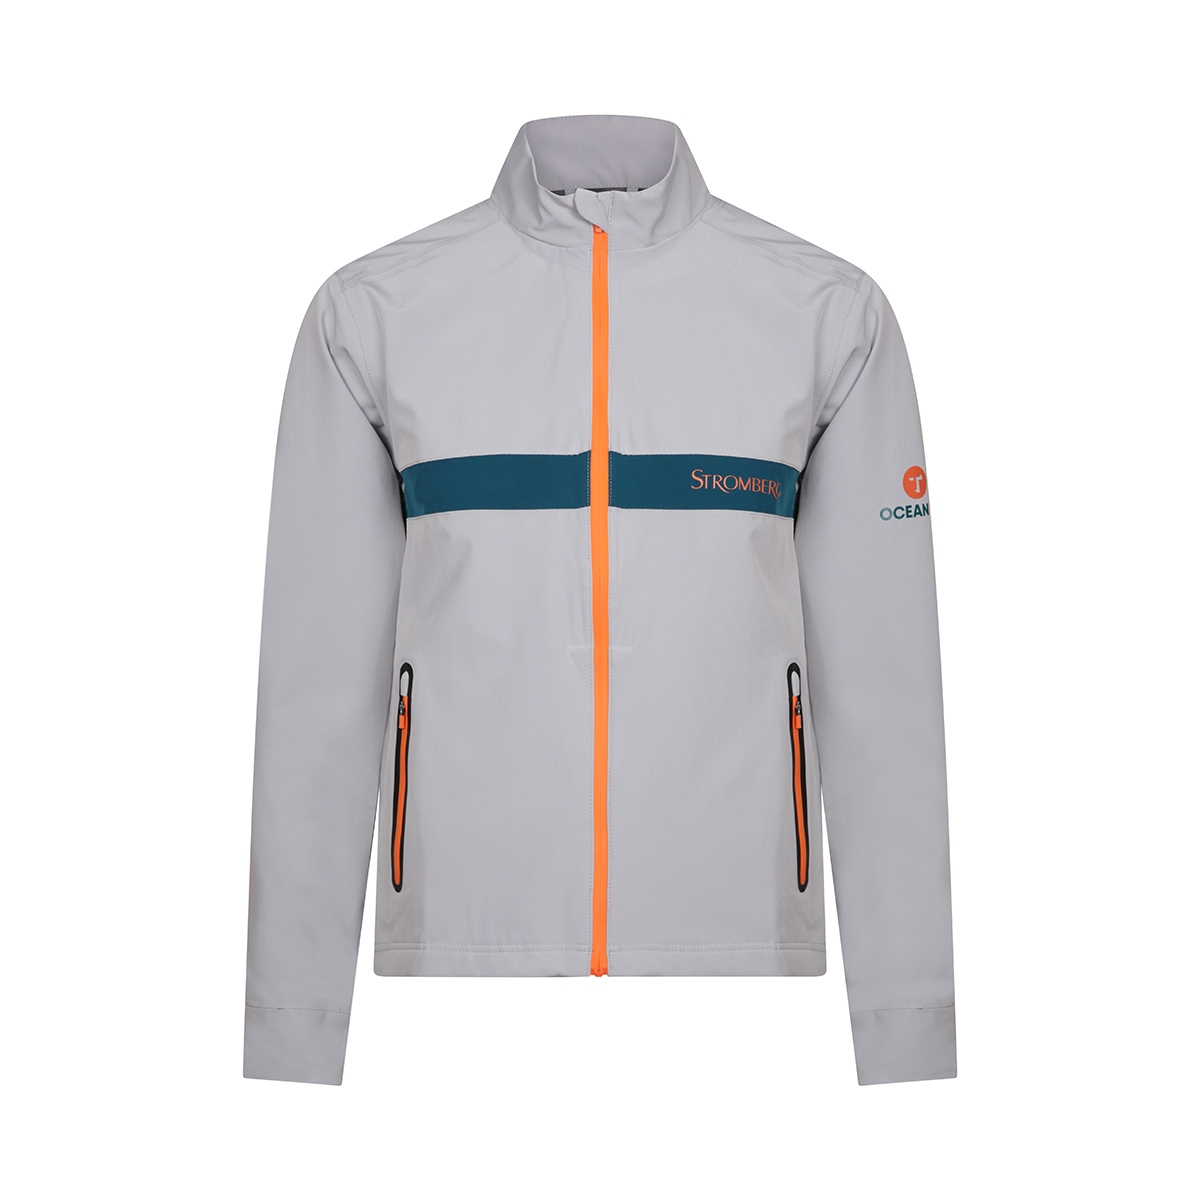 OceanTee Stromberg Waterproof Golf Jacket